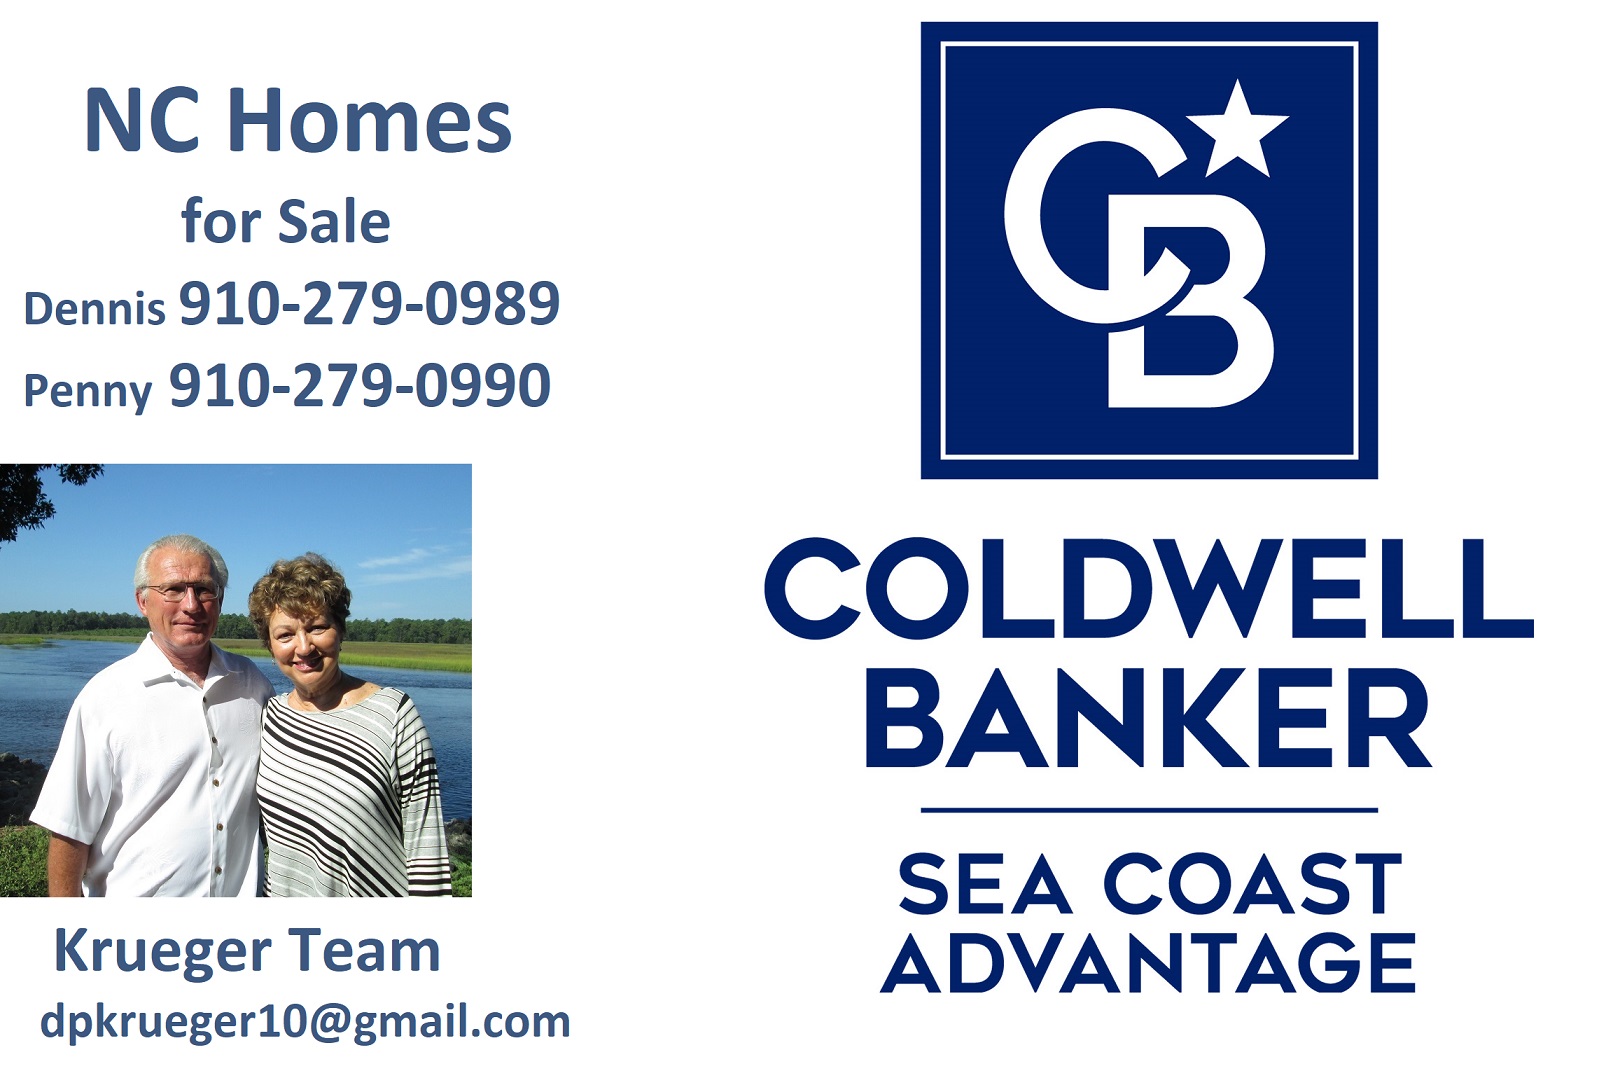 NC Homes for Sale Coldwell Banker Sea Coast Advantage